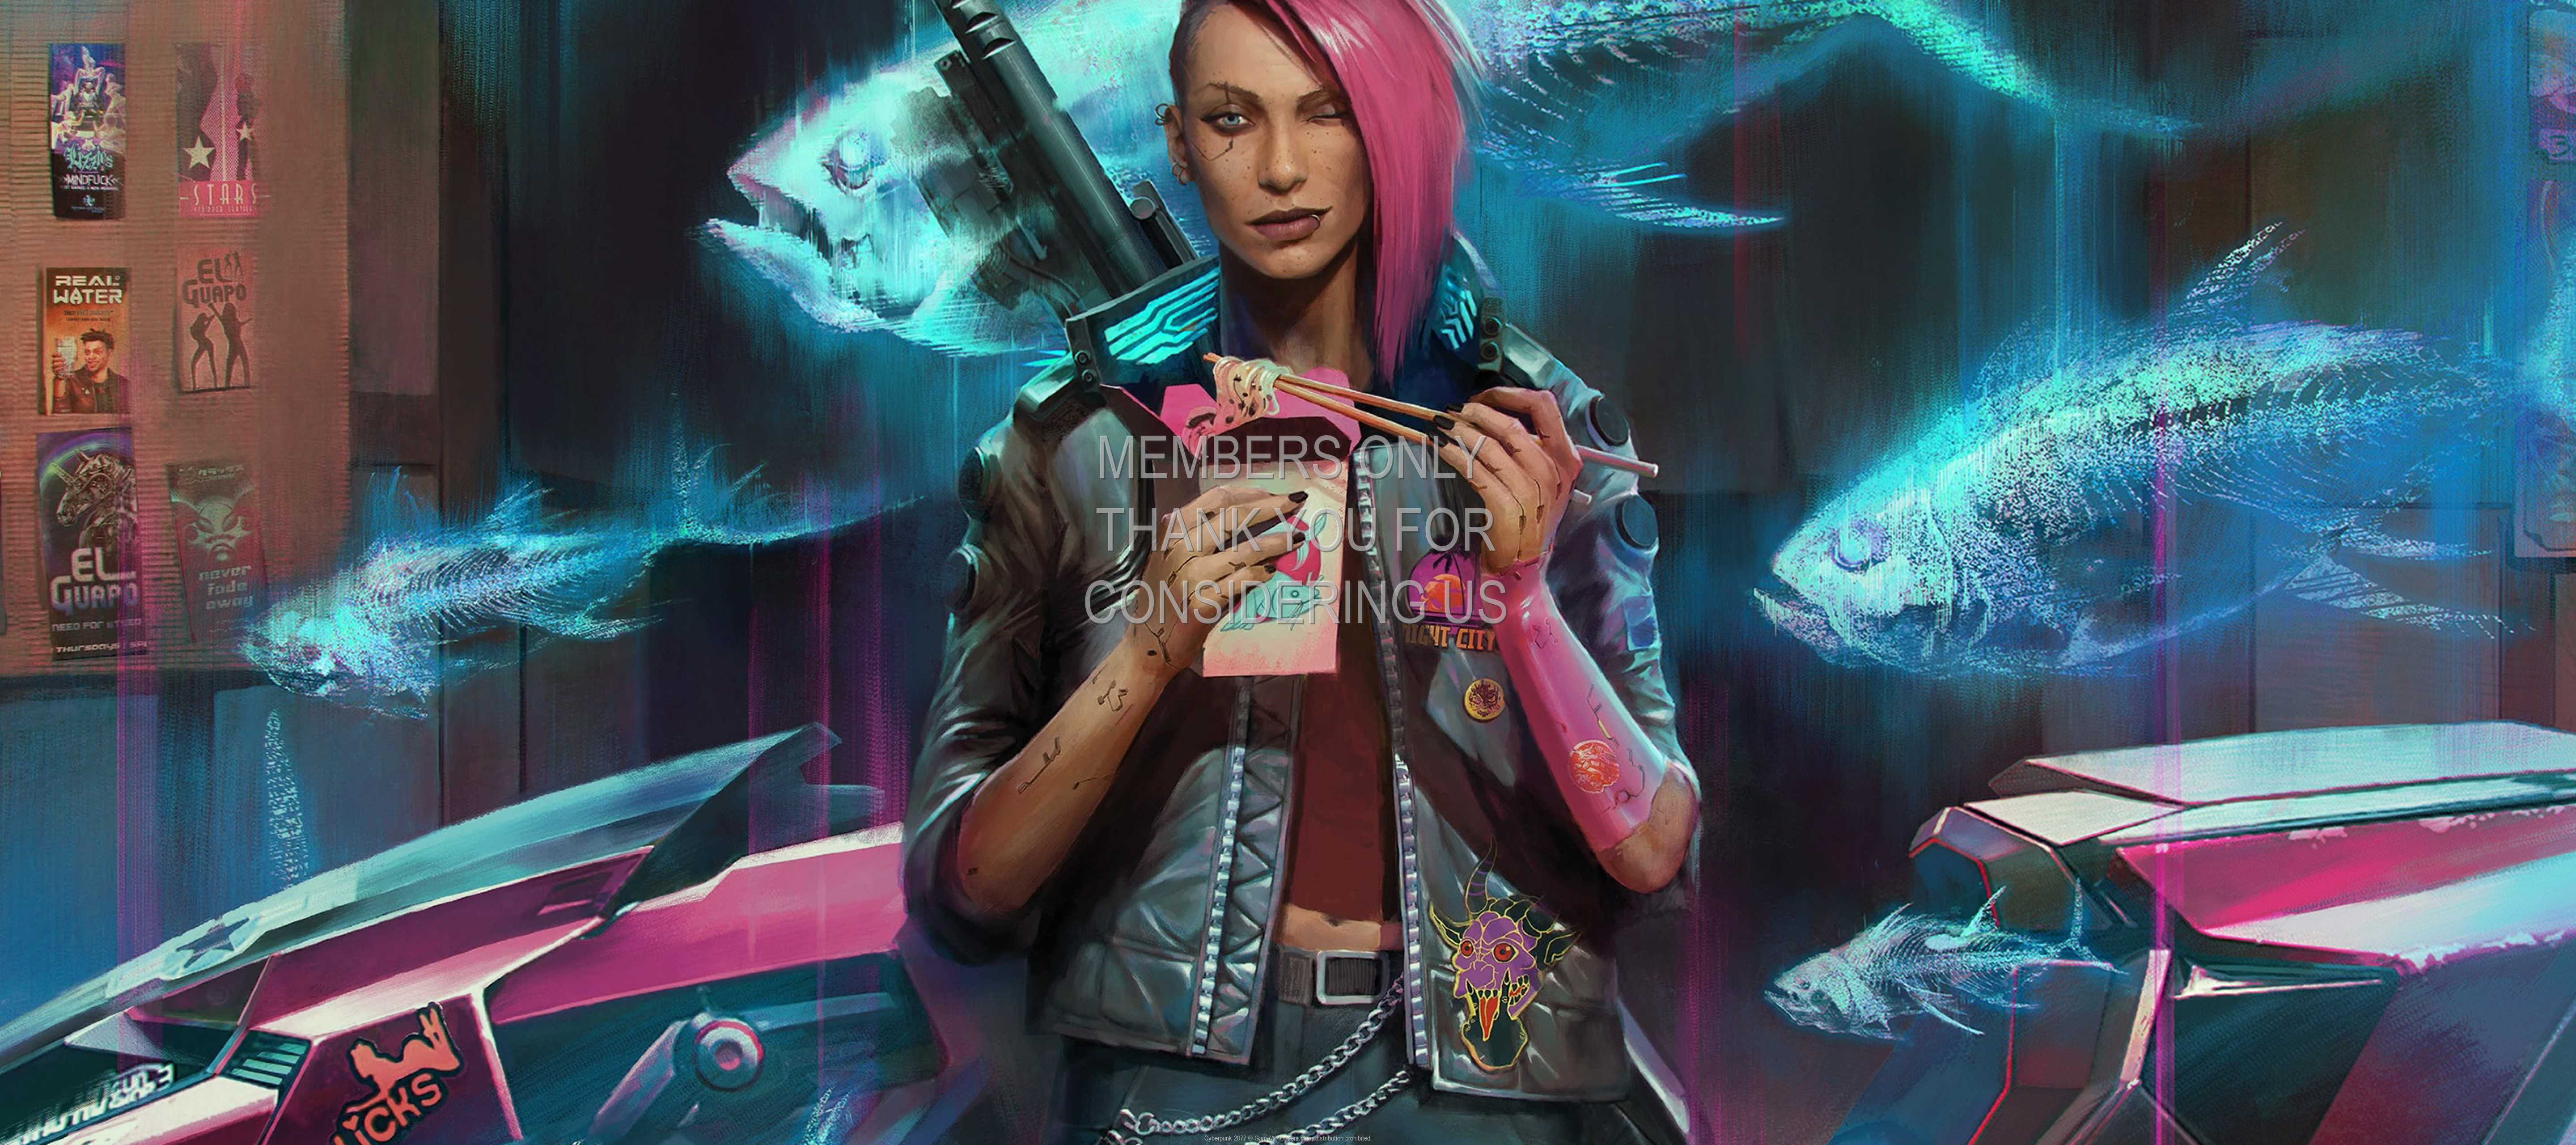 Cyberpunk 2077 1440p%20Horizontal Mobile wallpaper or background 41